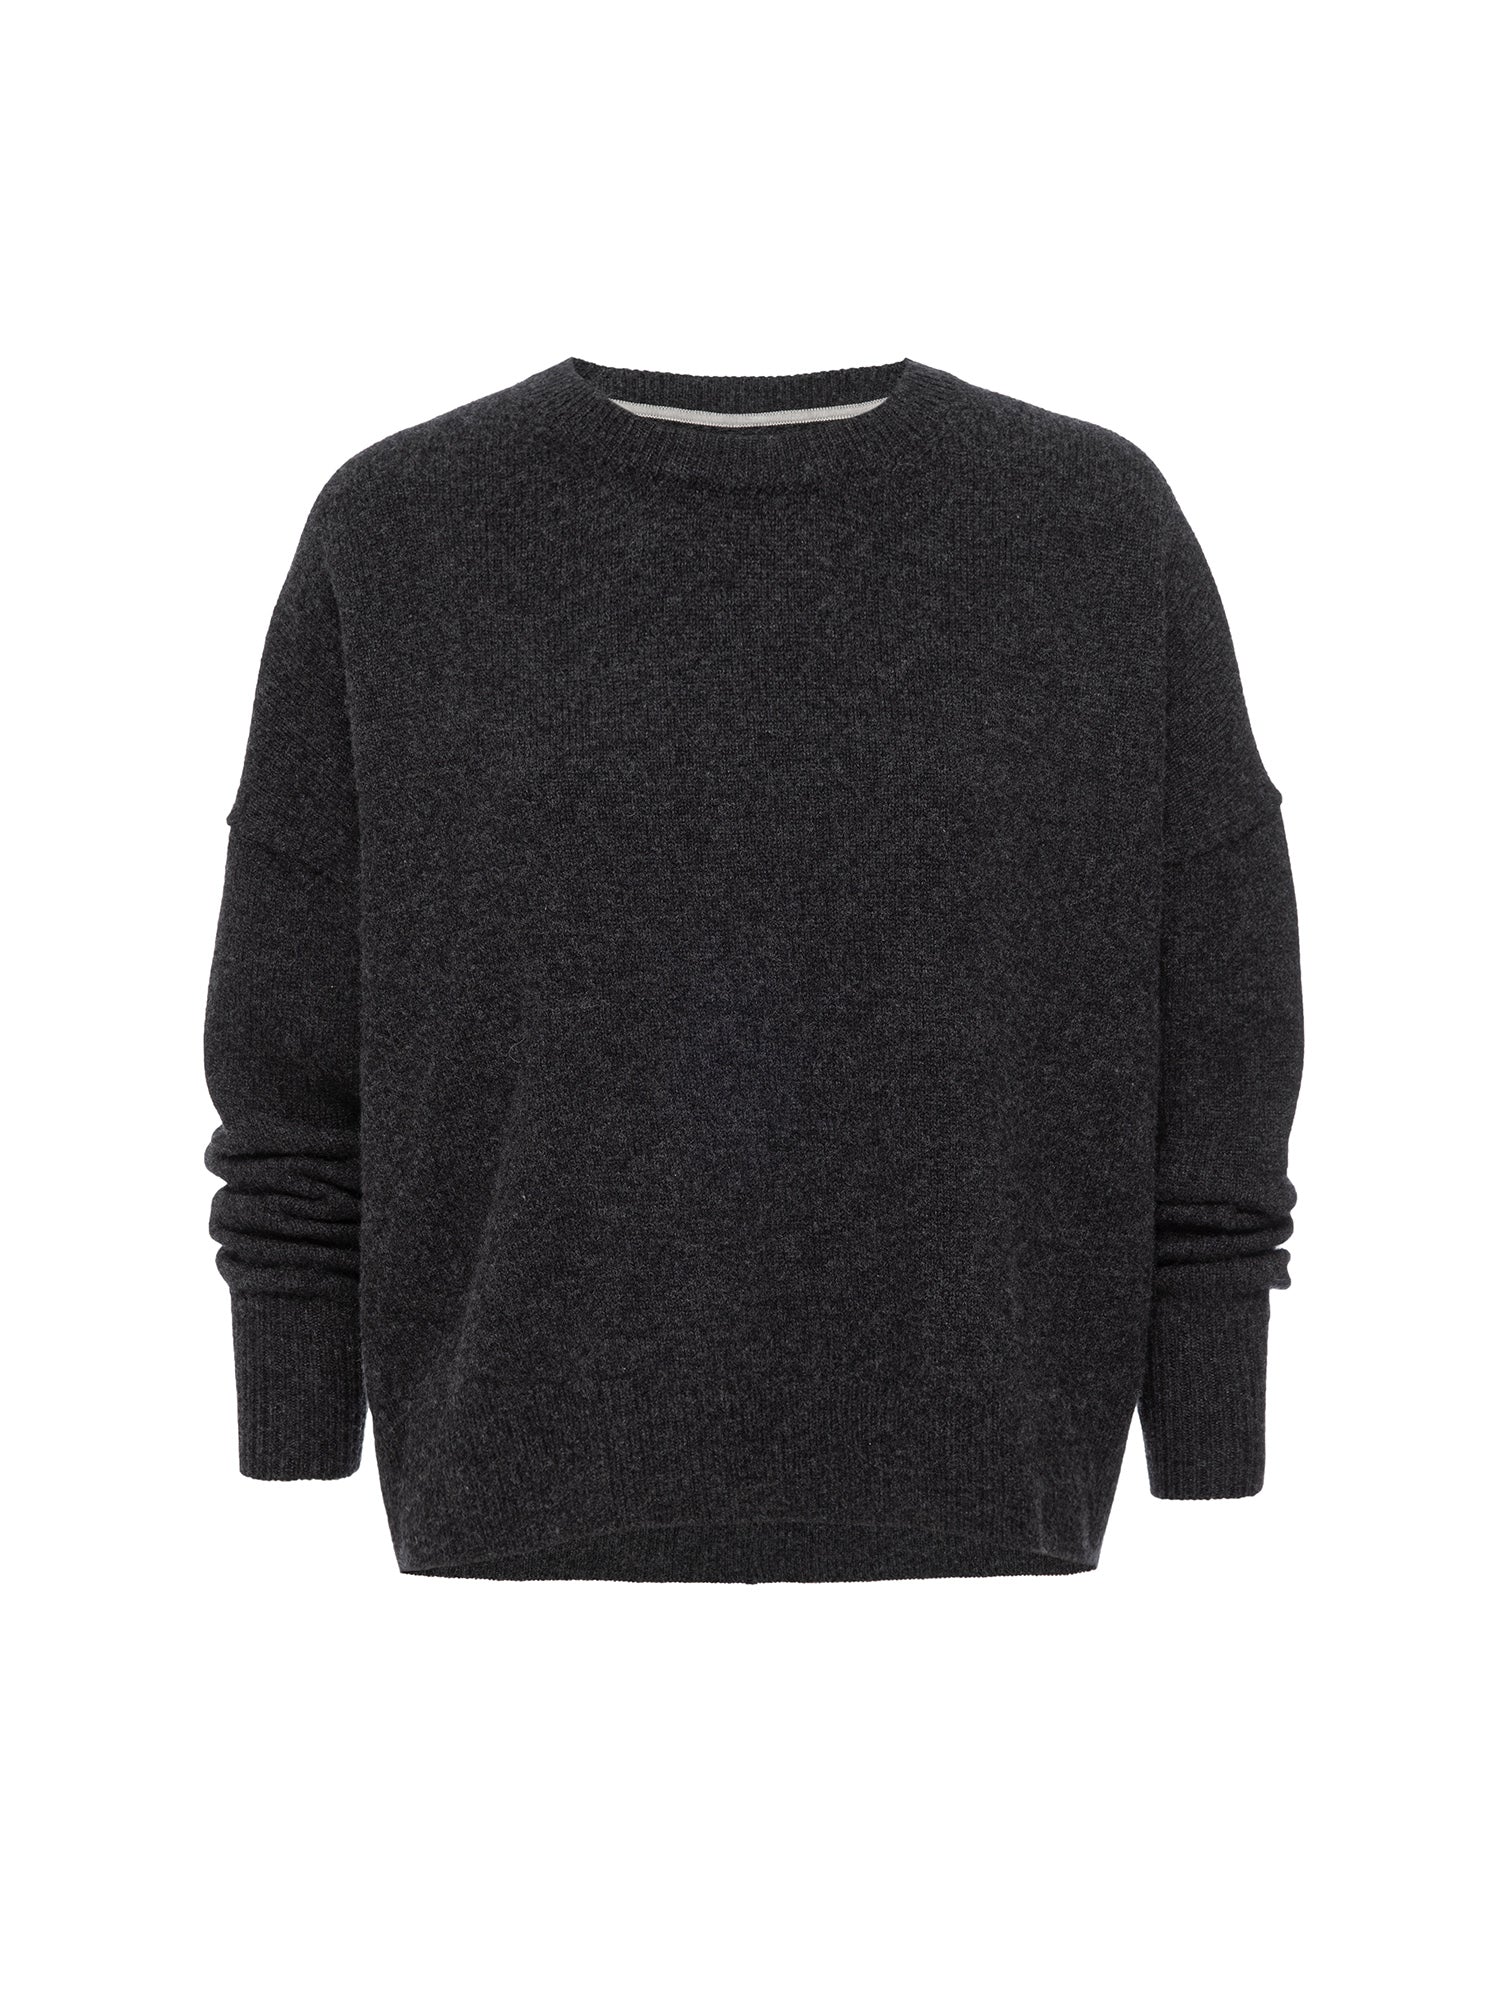 Everyday cashmere crewneck grey sweater flat view